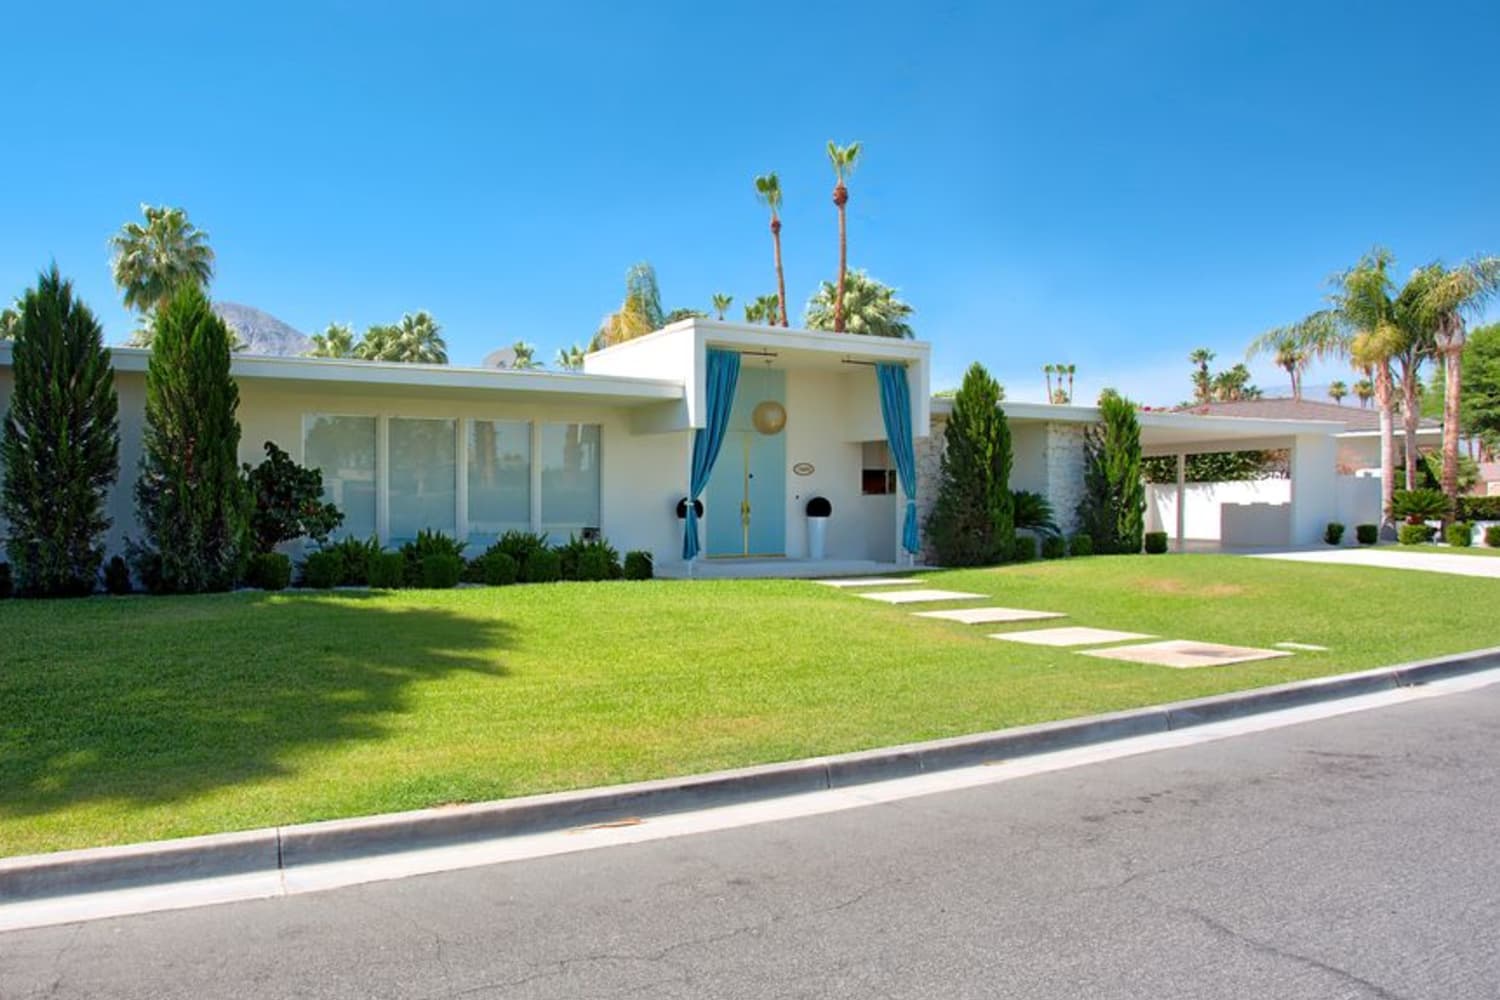 Podeu llogar Lucille Ball i Desi Arnaz’s California Home per 500 $ / nit